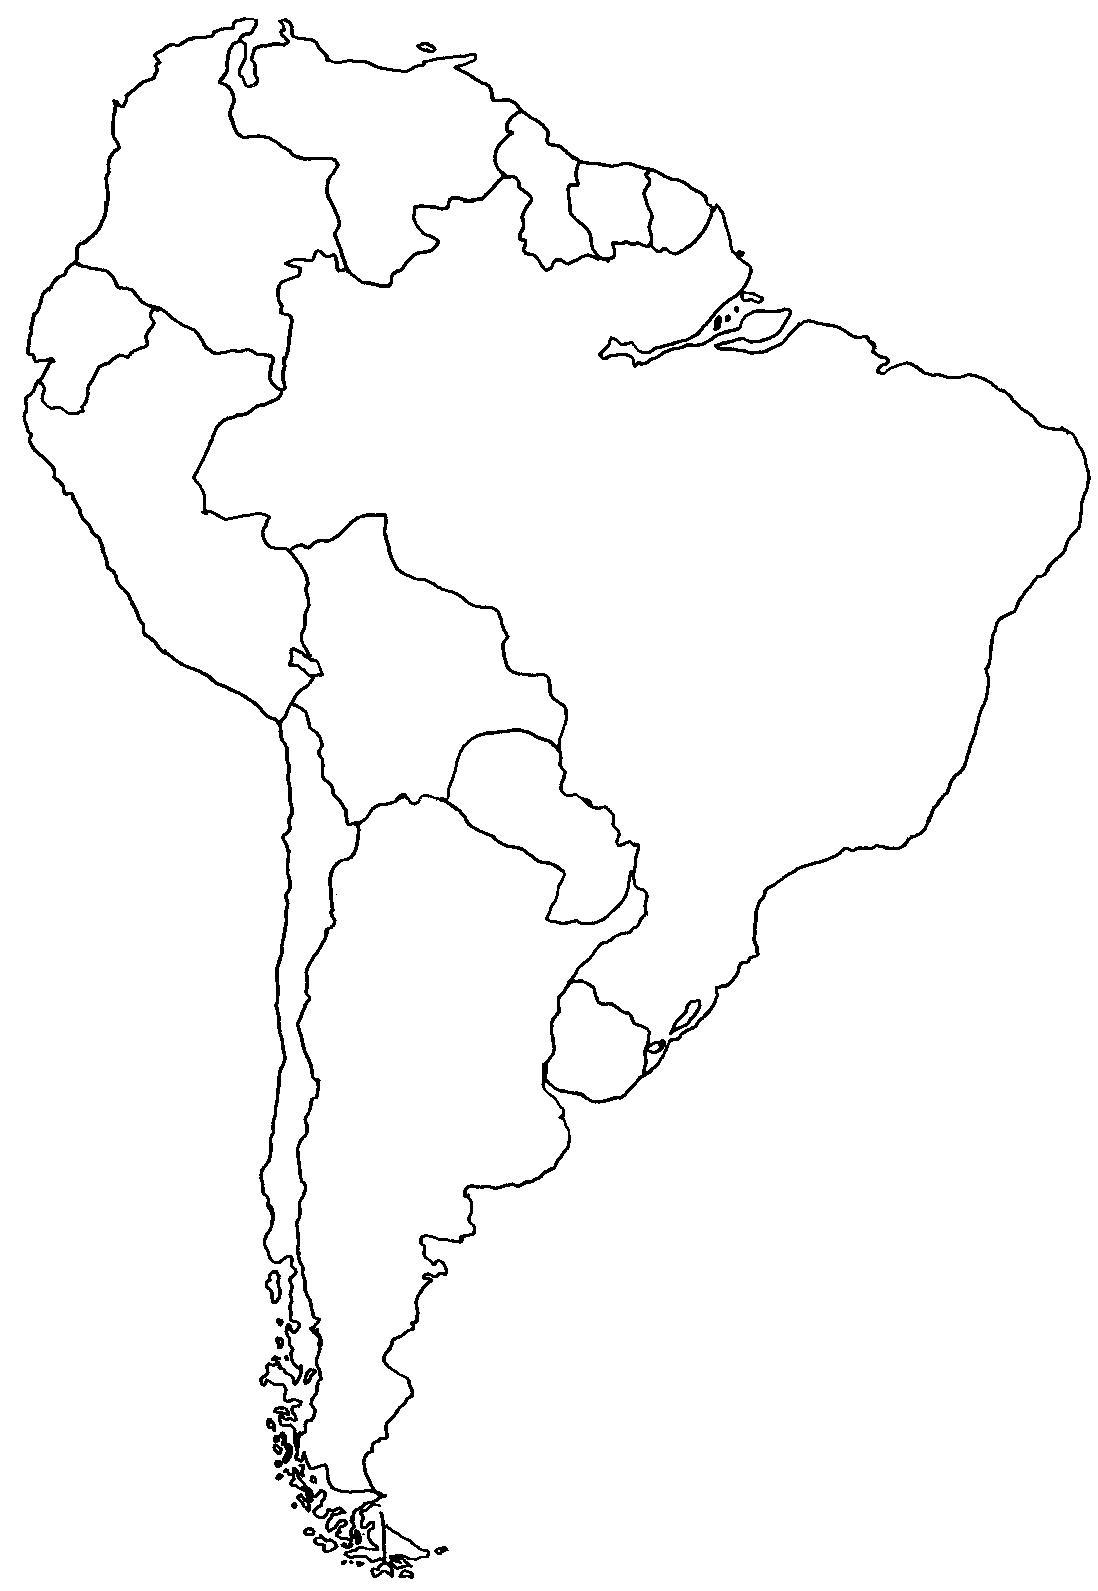 South american country. Контурная карта Южной Америки. Карта Южной Америки контурн. Контур материка Южная Америка. Карта Южная Америка раскраска карта.